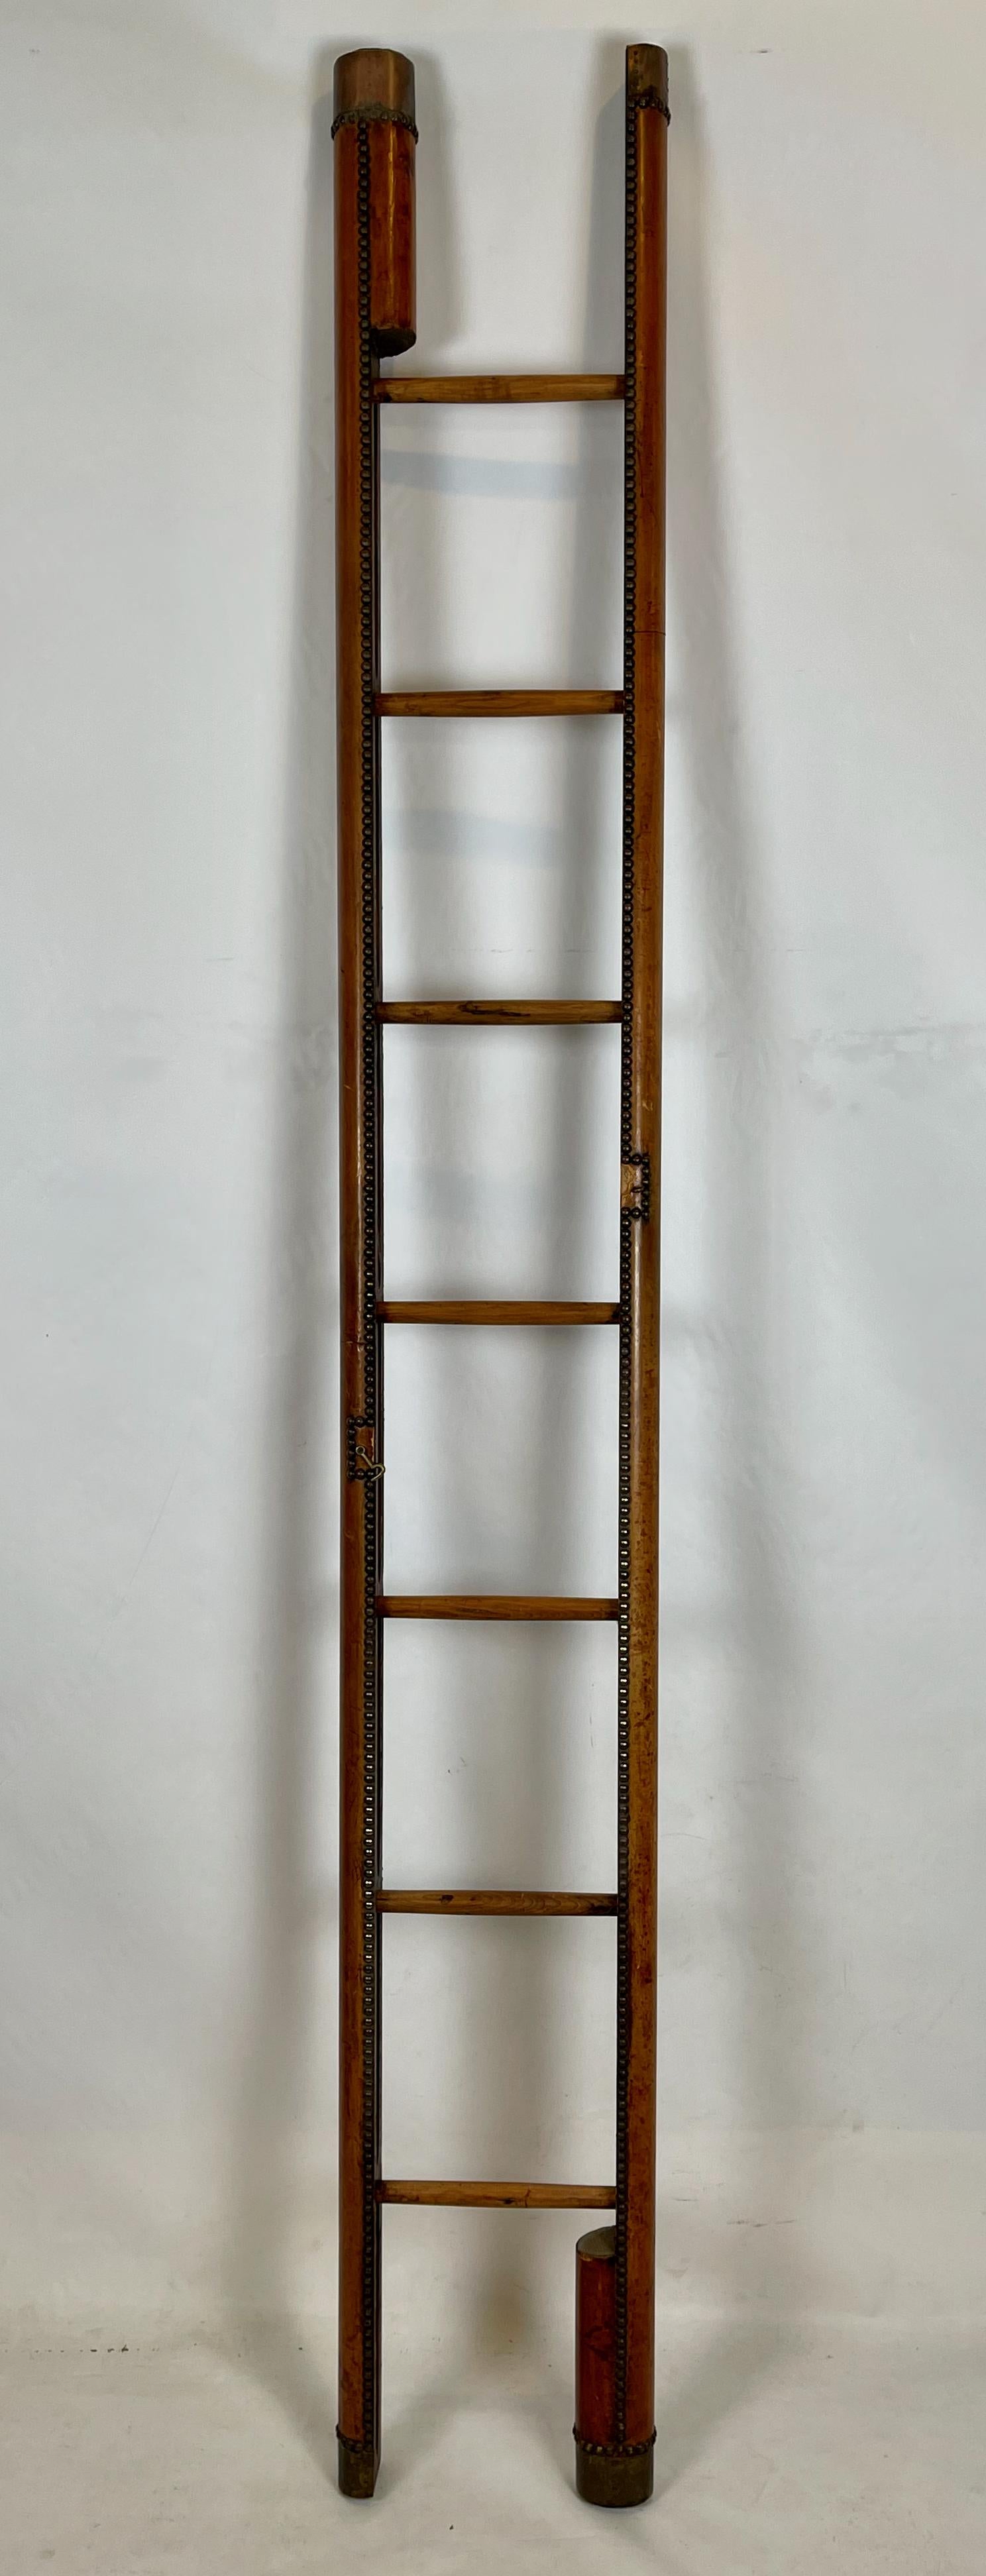 Early 20th Century English Leather Clad Folding Pole Ladder 2